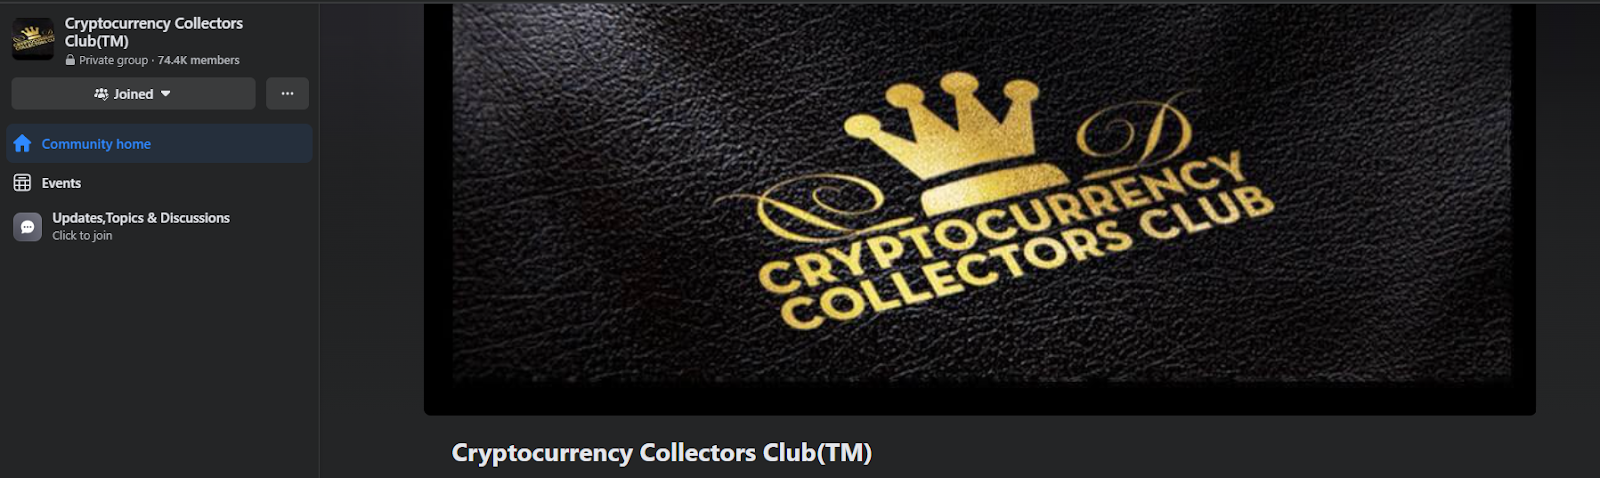 Cryptocurrency Collectors Club Zelta